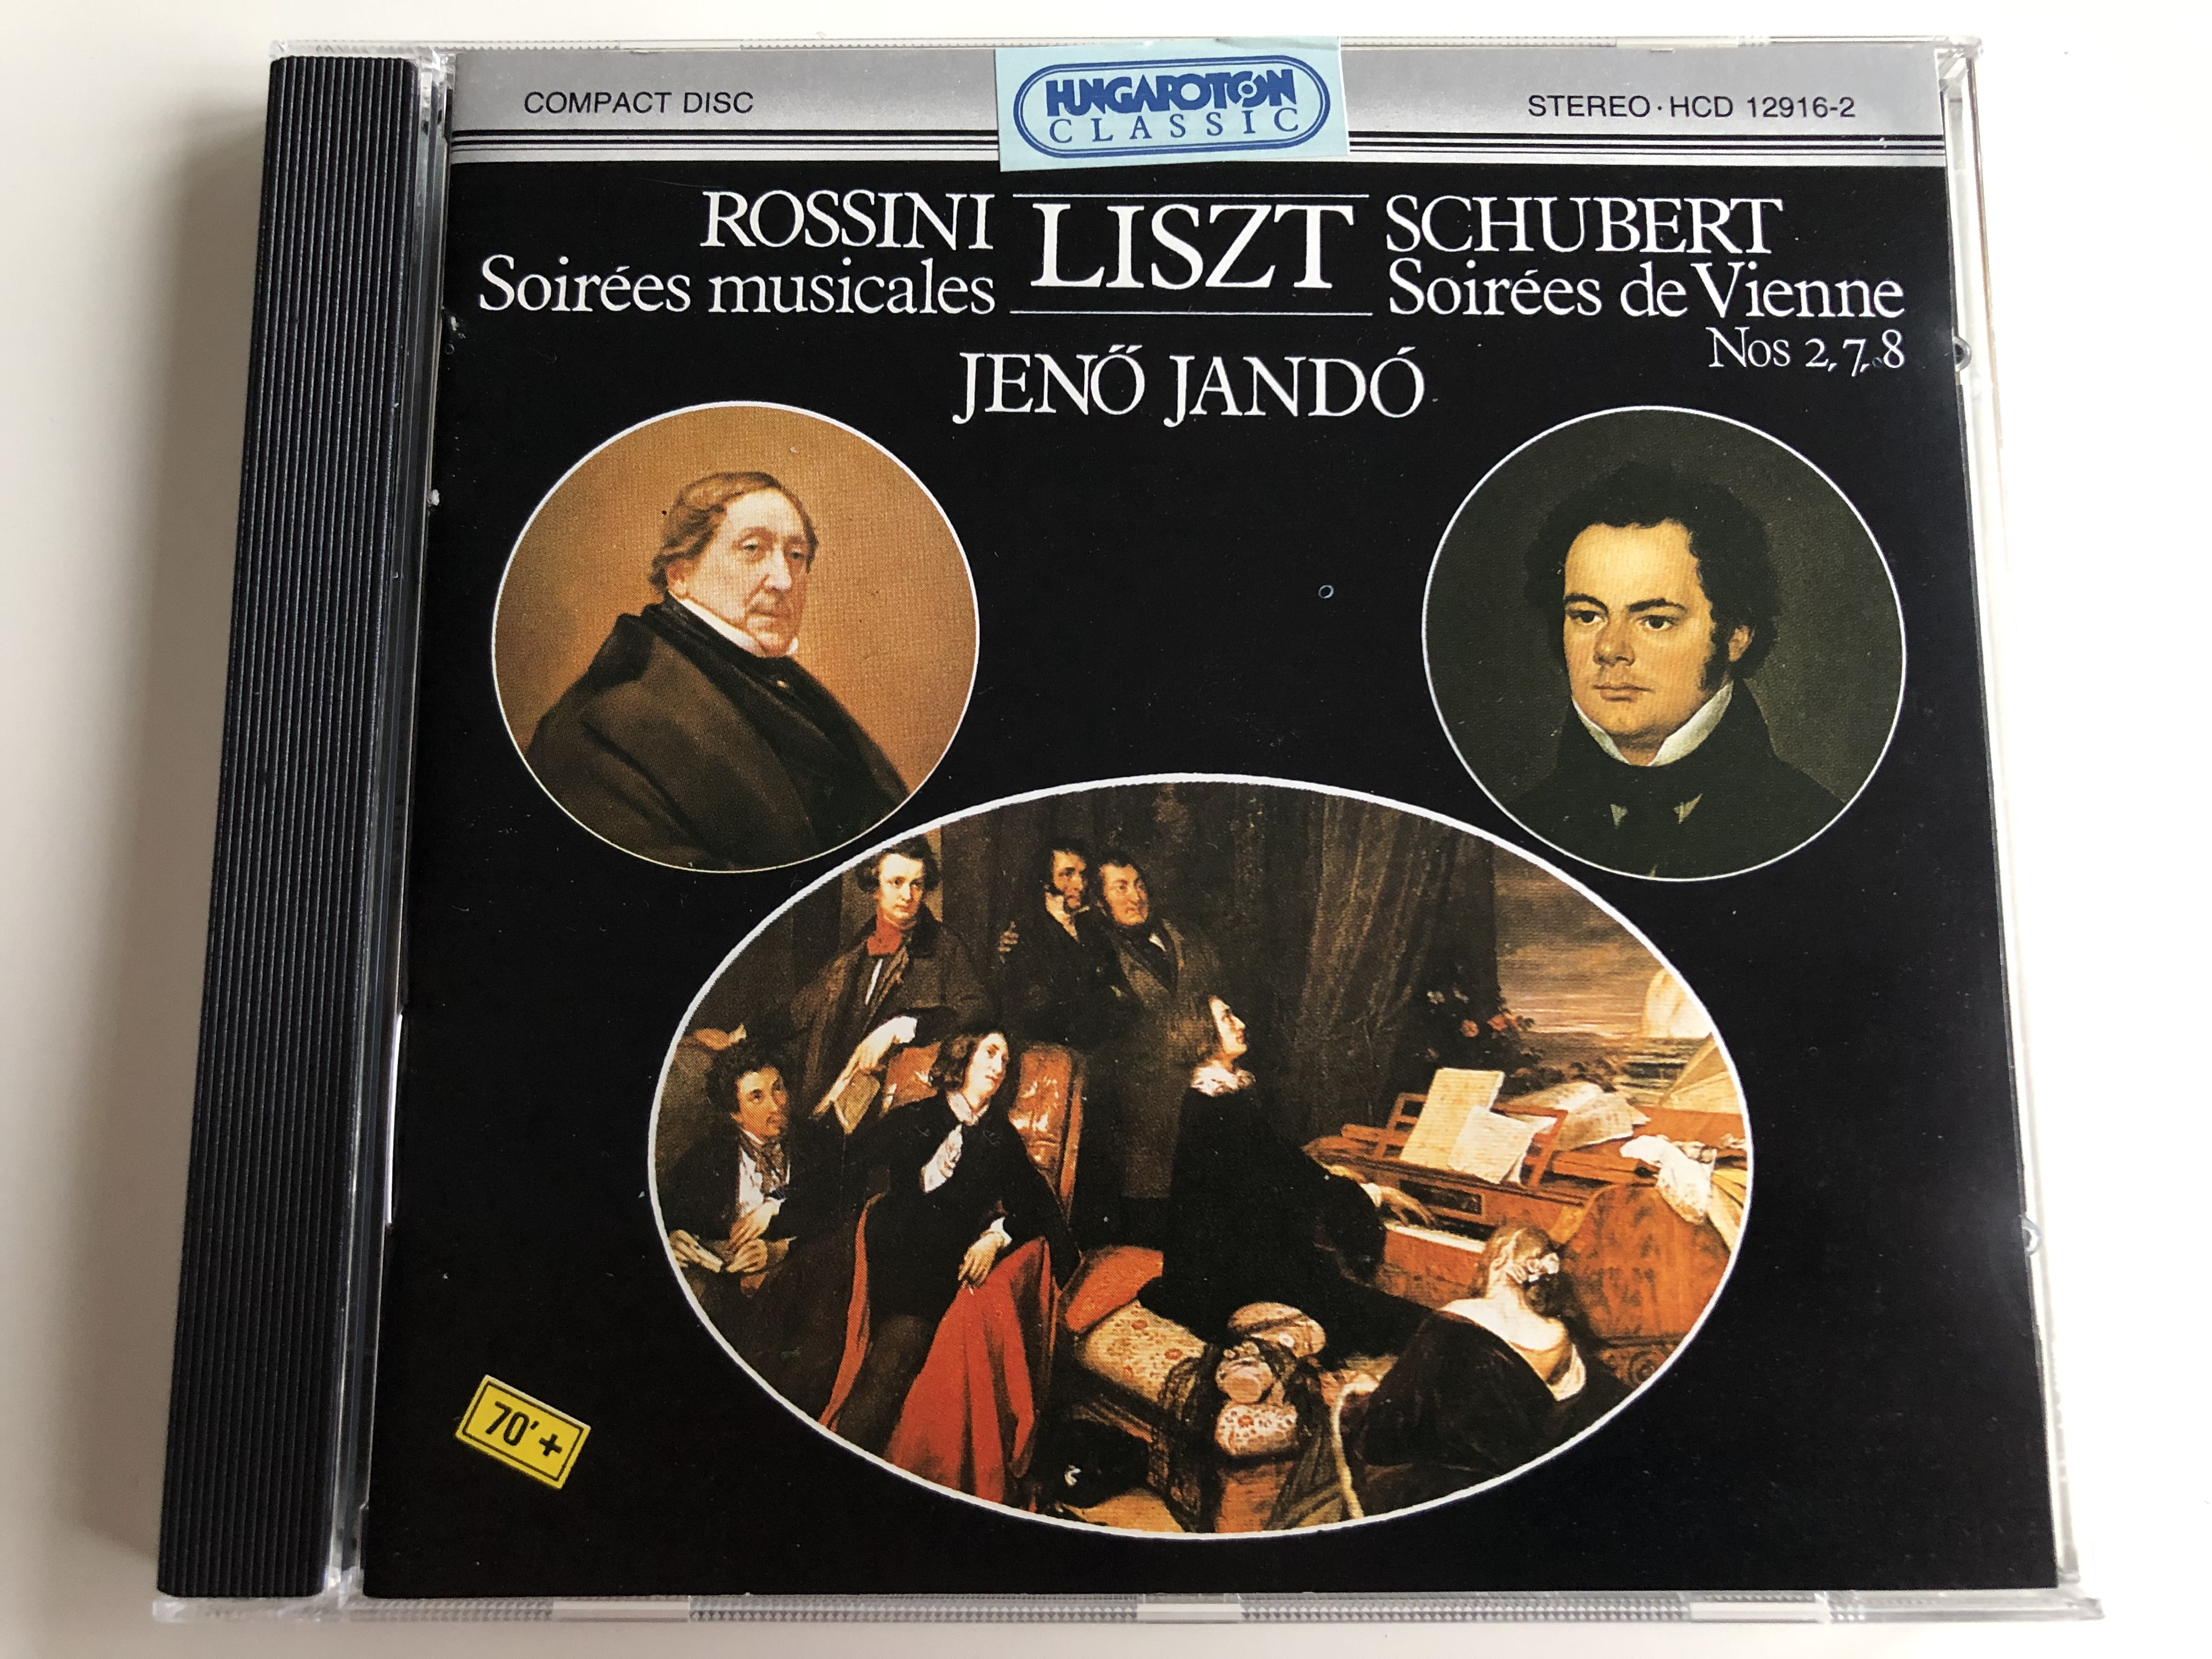 rossini-liszt-soir-es-musicales-liszt-schubert-soir-es-de-vienne-performed-by-jen-jand-piano-hungaroton-classic-hcd-12916-2-1-.jpg